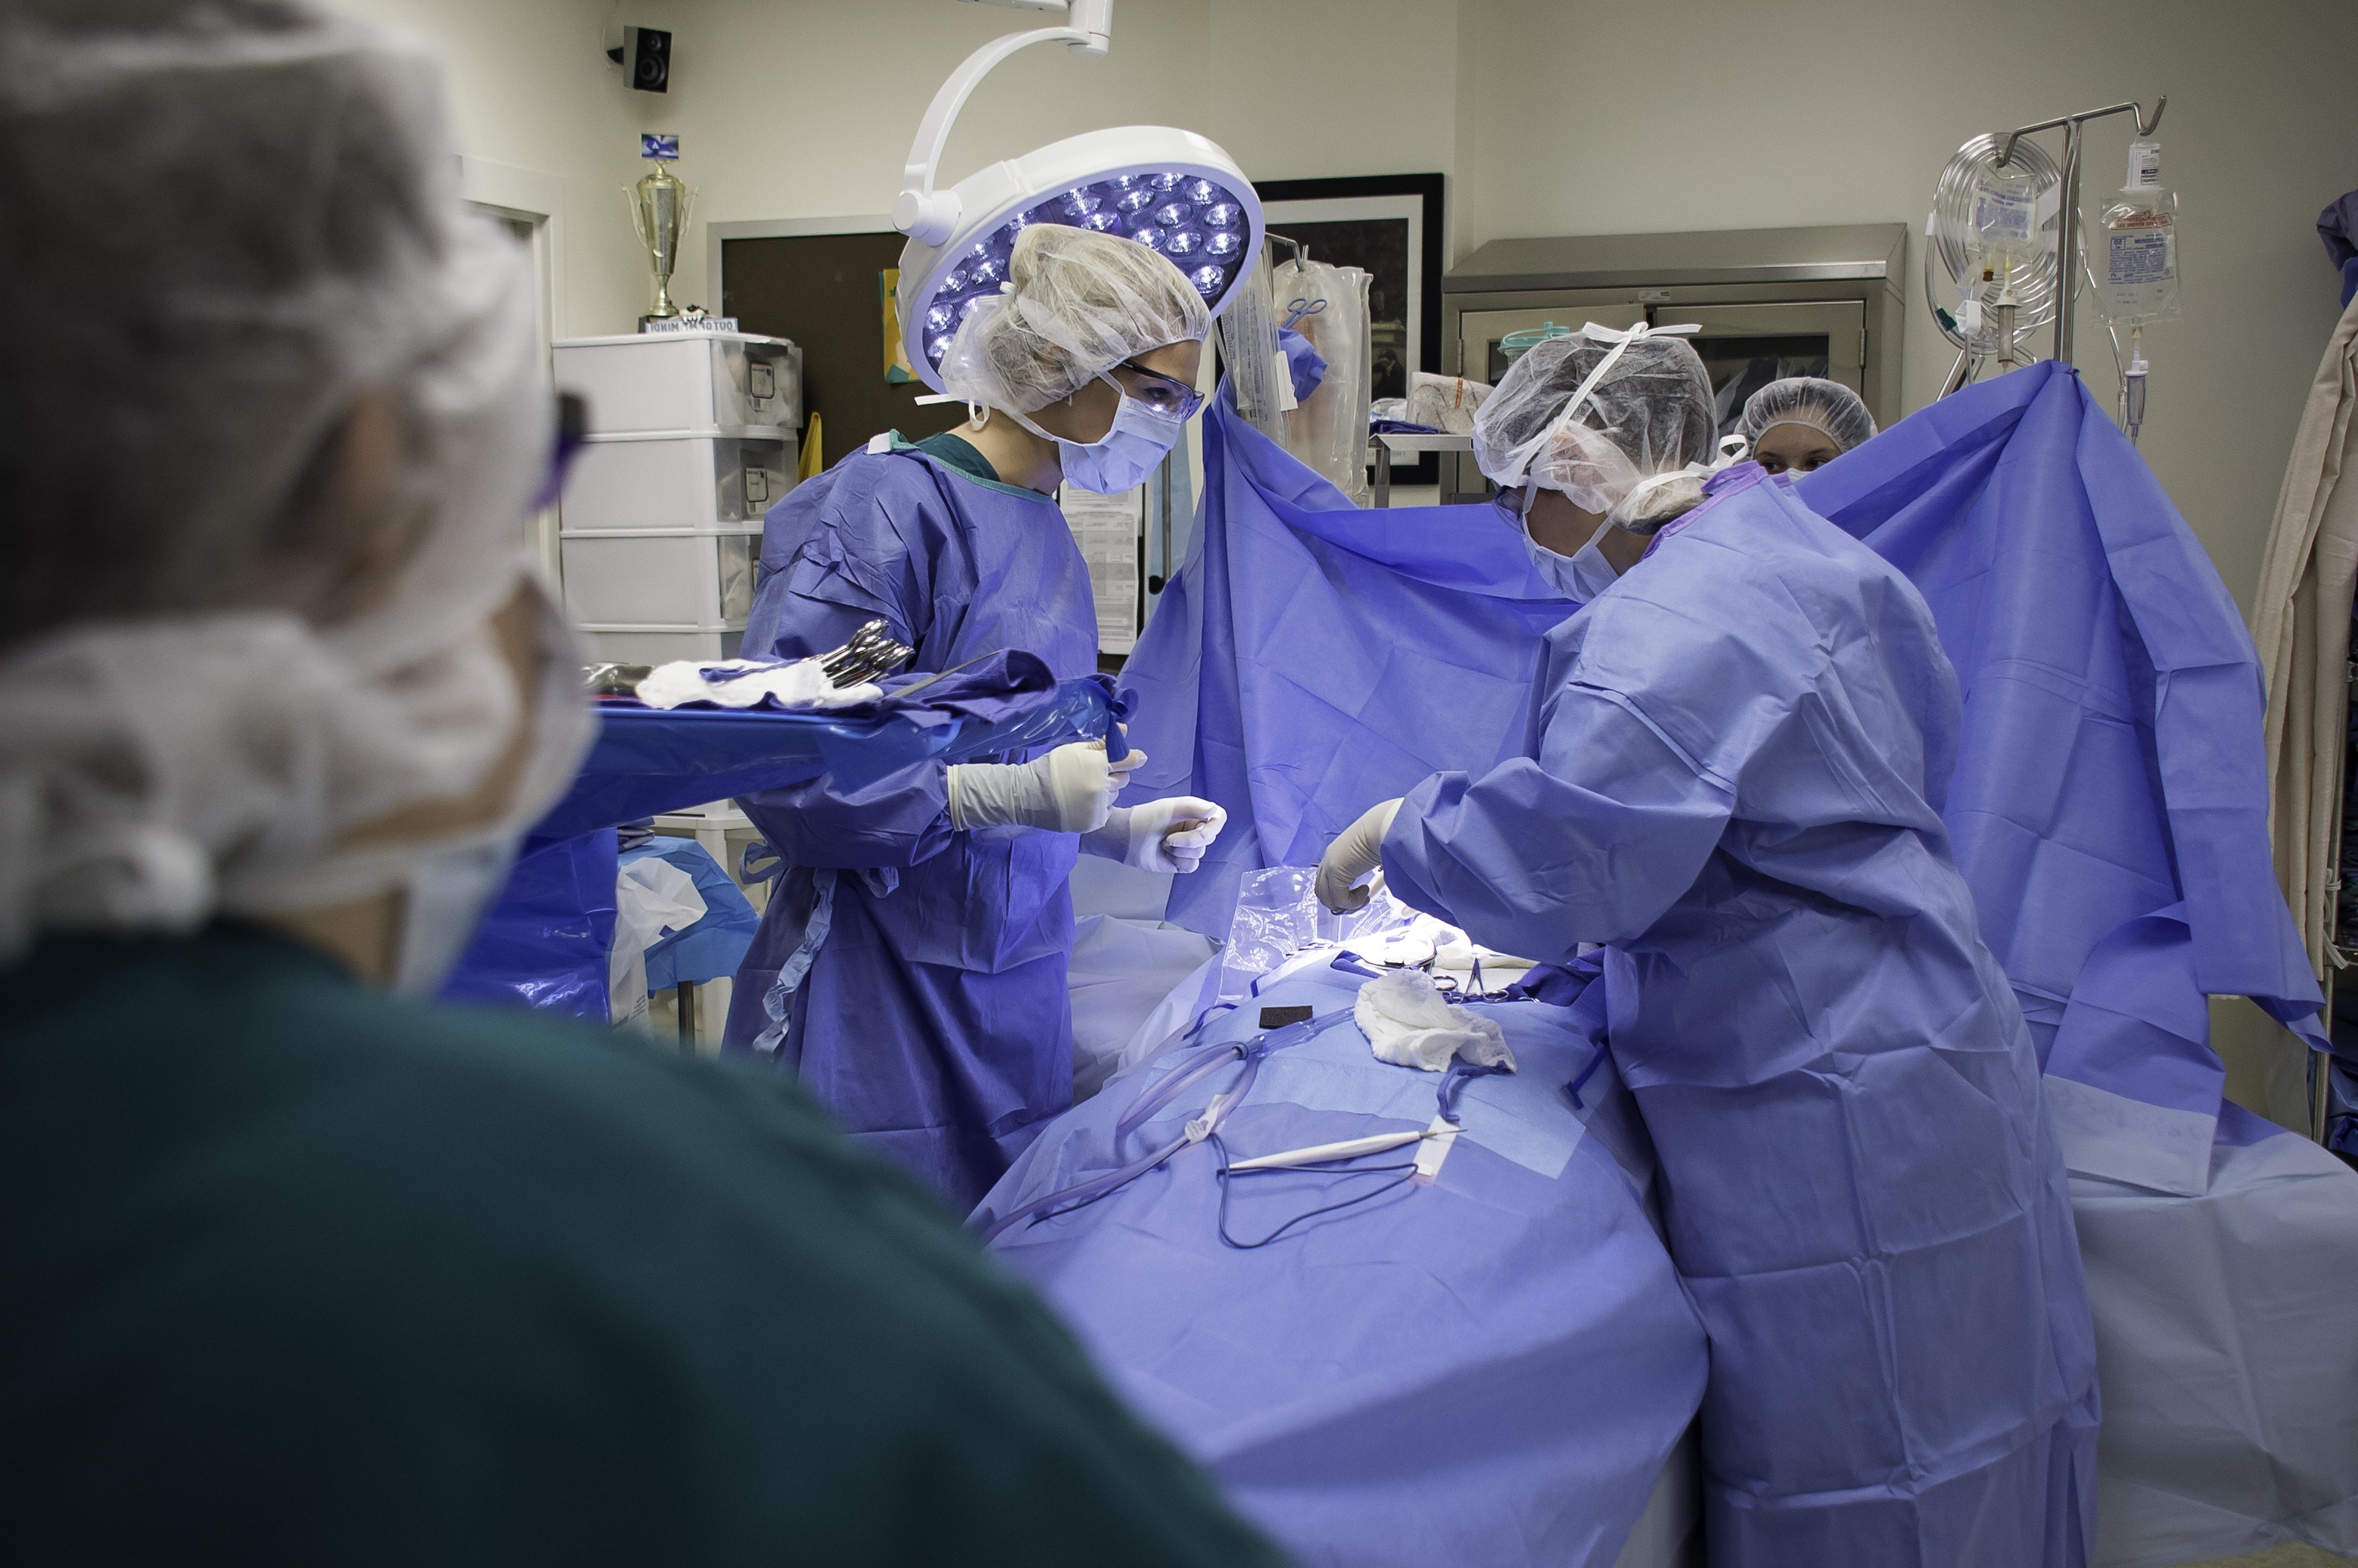 Surgeons preparing to operate on someone